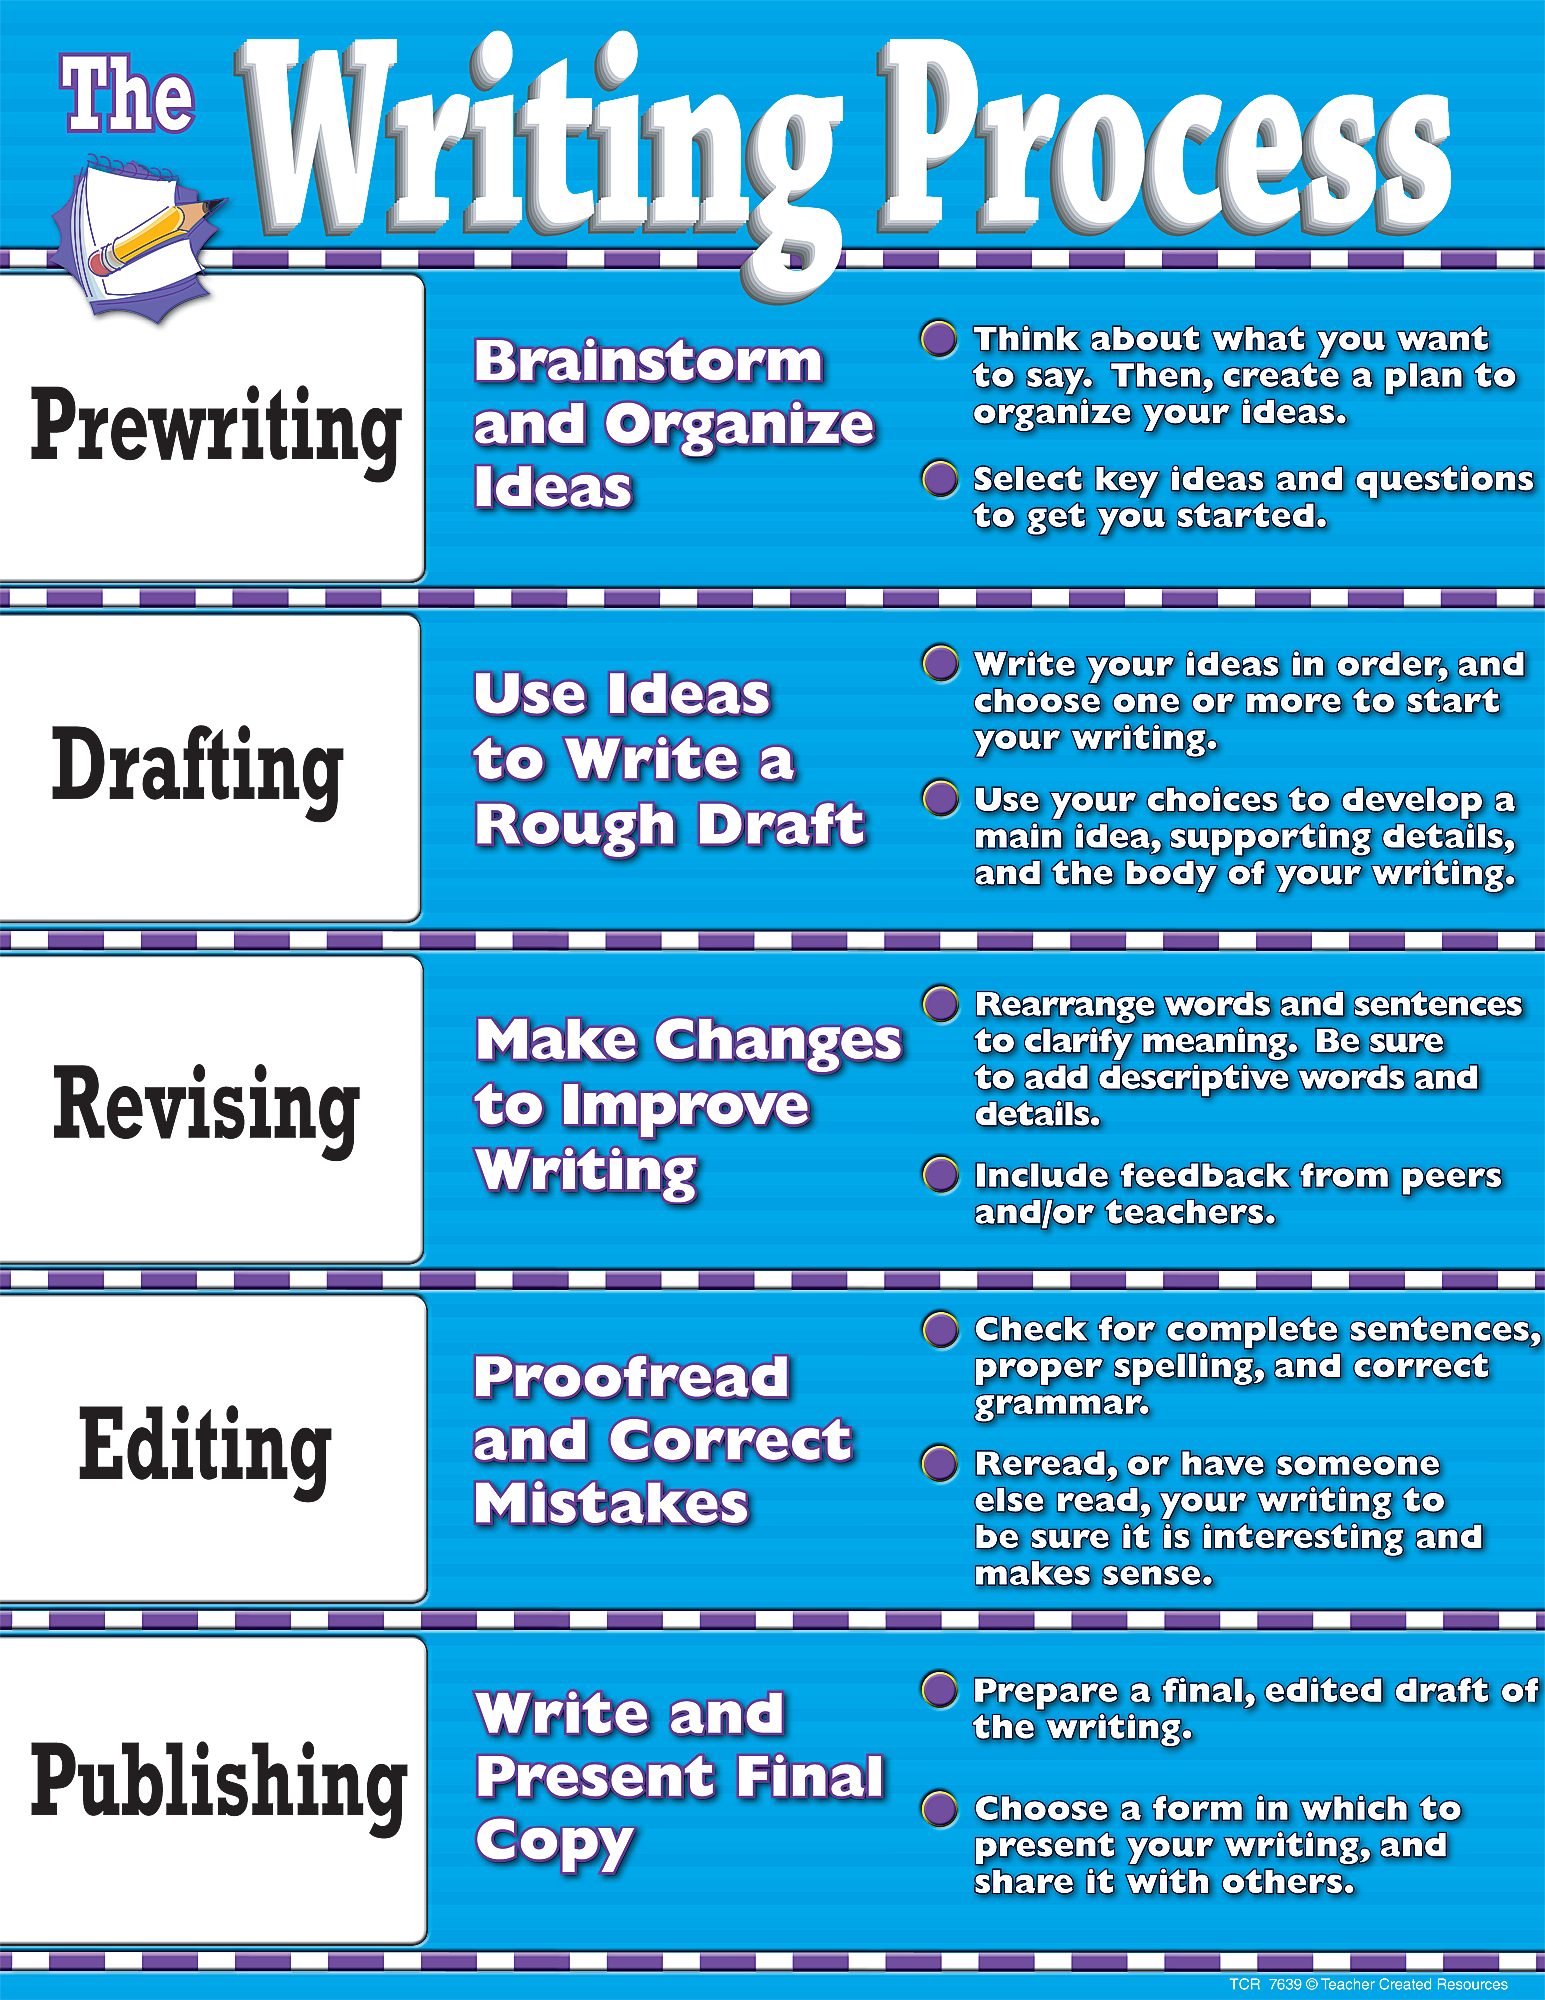 types of essay process